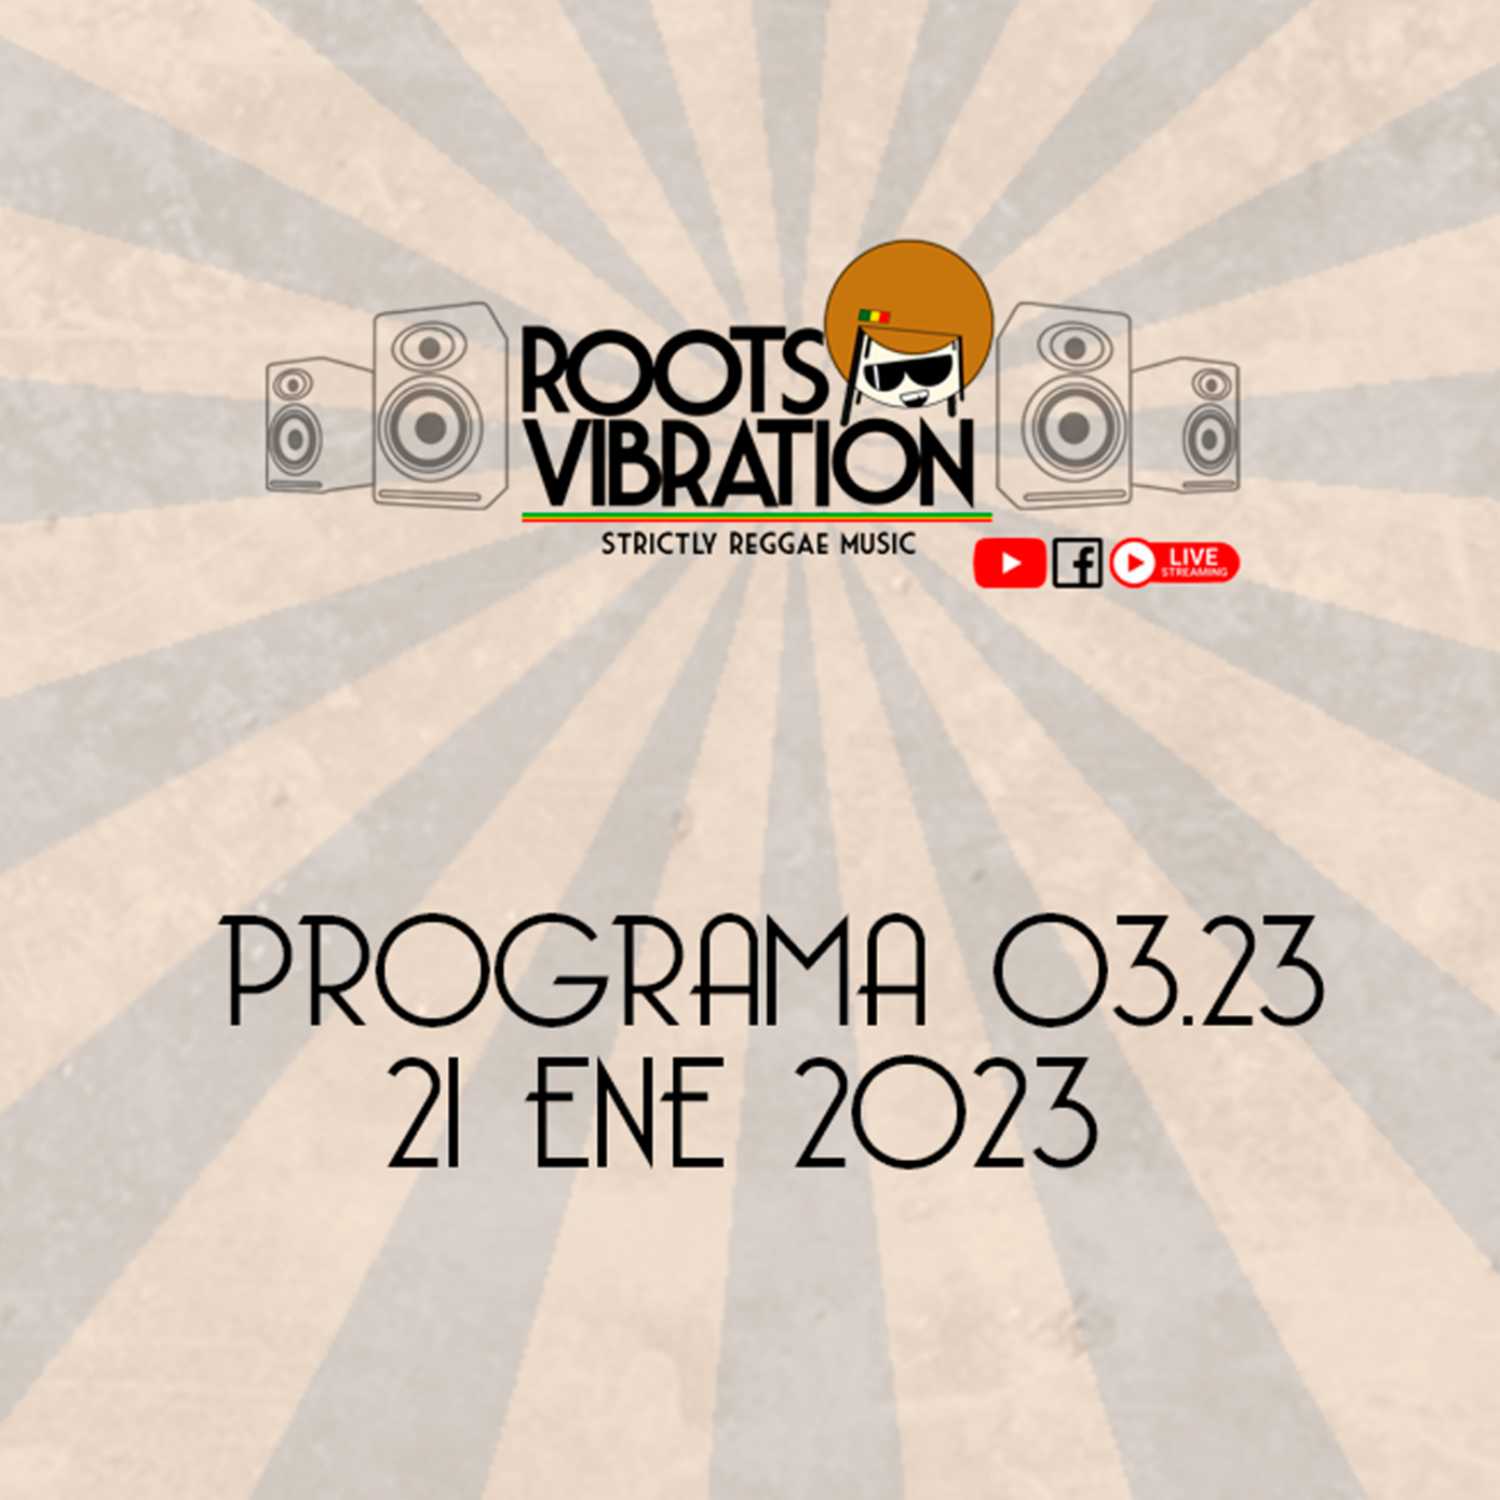 Programa 03.2023 ROOTS VIBRATION